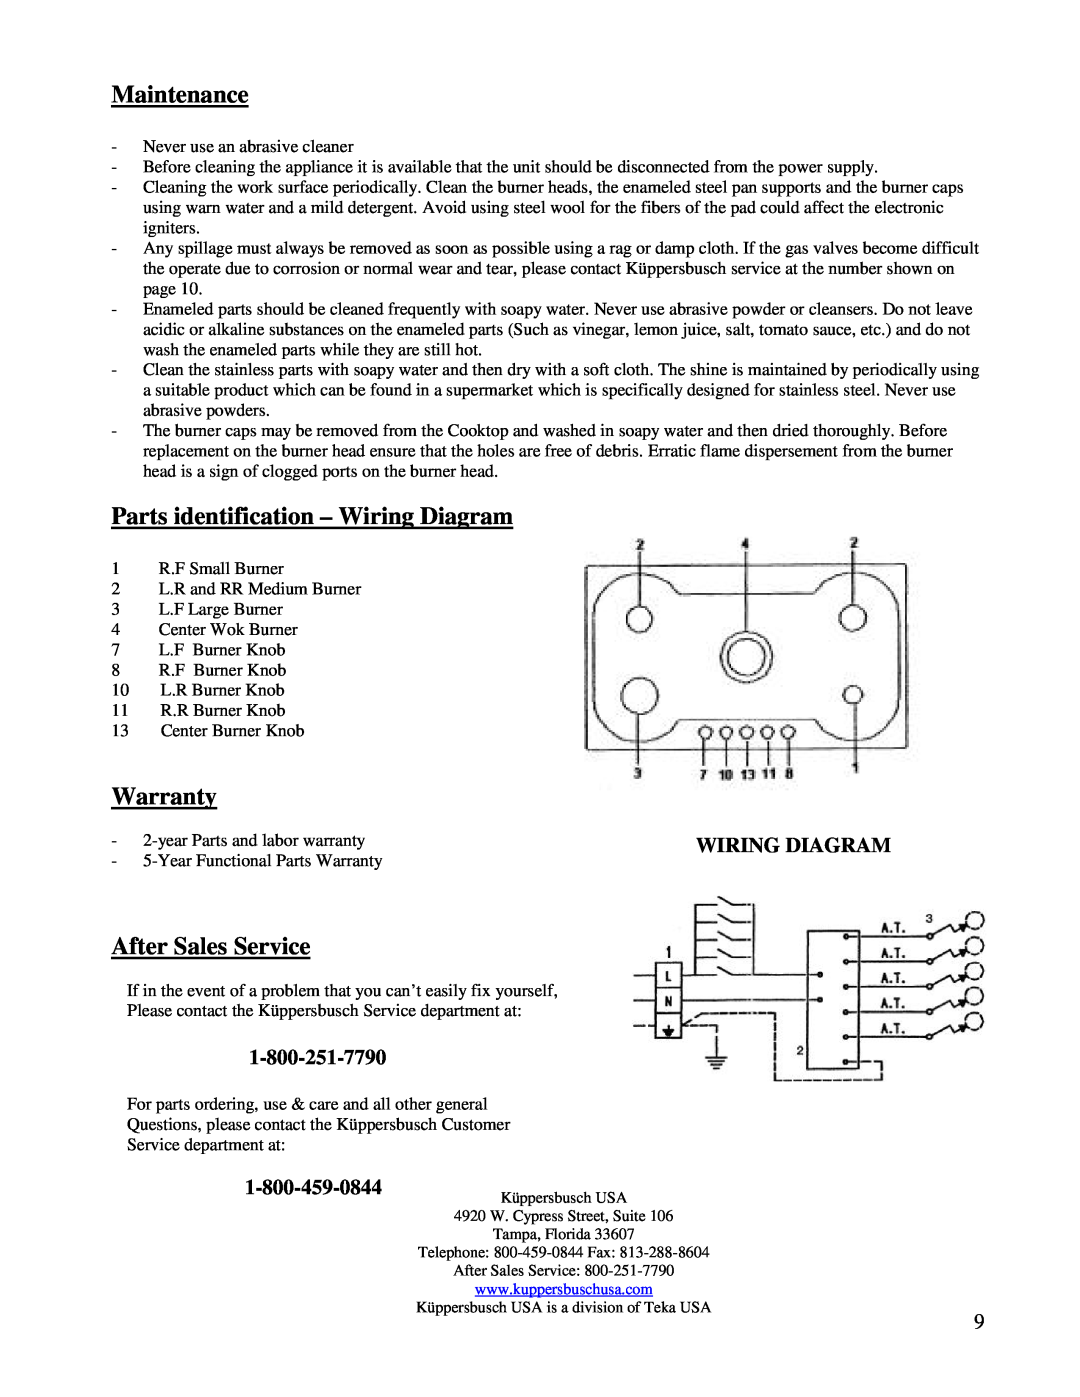 Kuppersbusch USA GMS 955.1 manual Maintenance, Parts identification - Wiring Diagram, Warranty, After Sales Service 